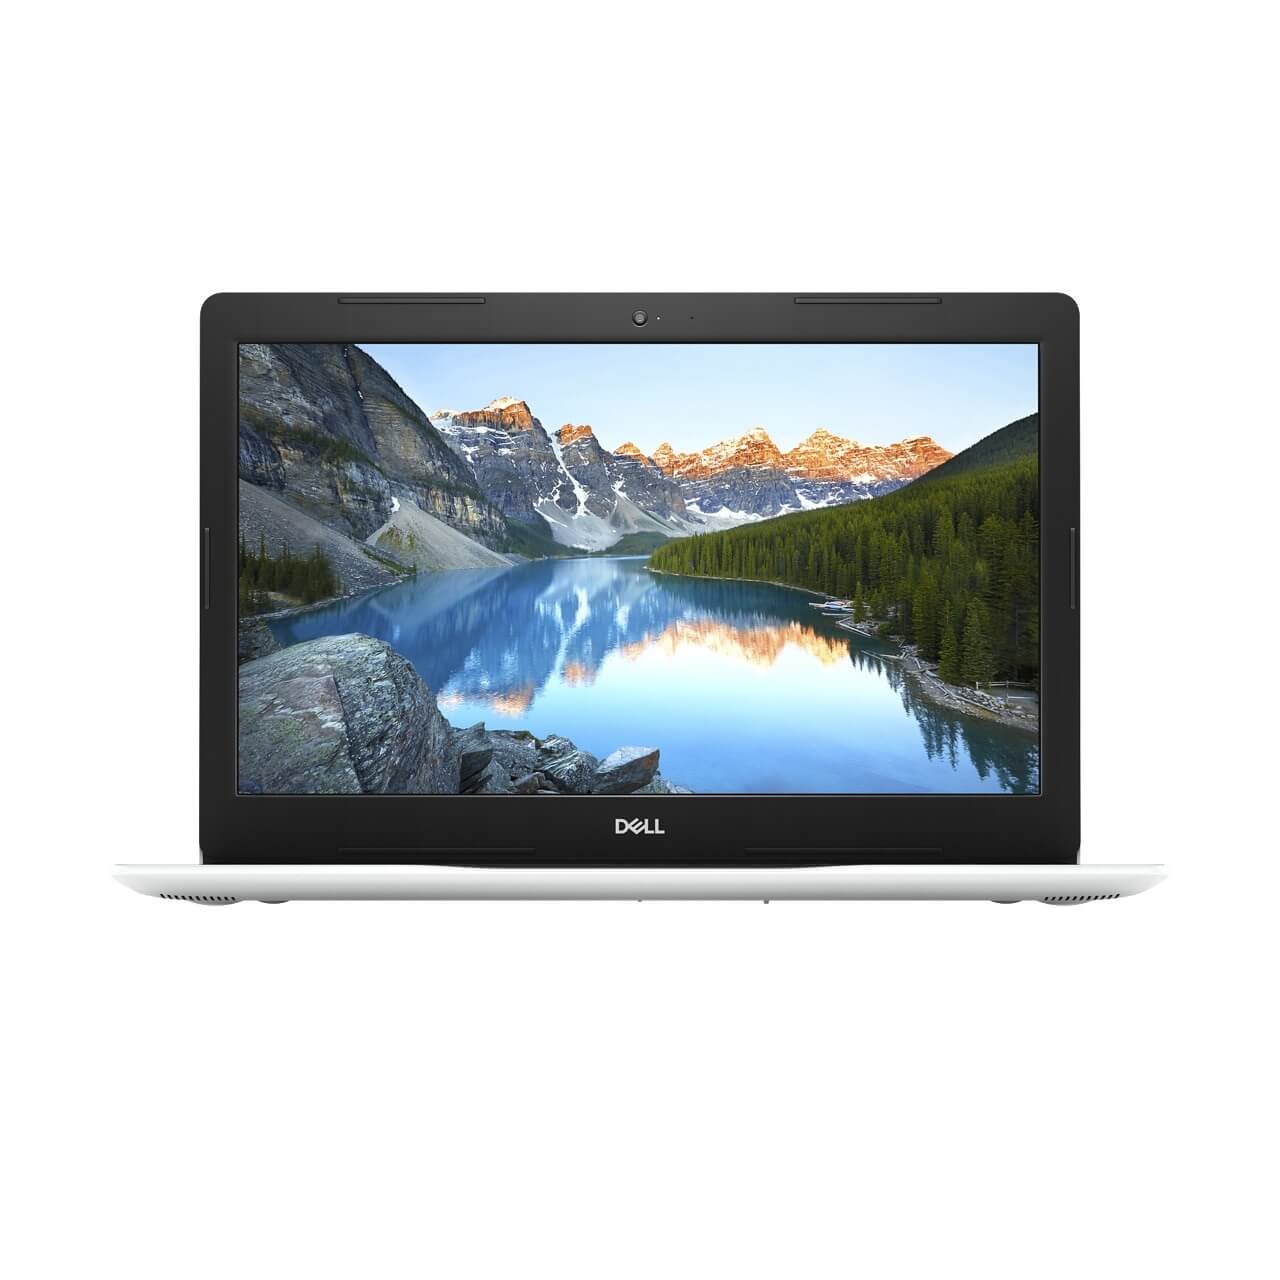 Dell - Laptop INSPIRON 3581 i3 de 15.6" - Core i3 - Intel Integrated Graphics - Memoria 8GB - Disco duro 1TB - Gris